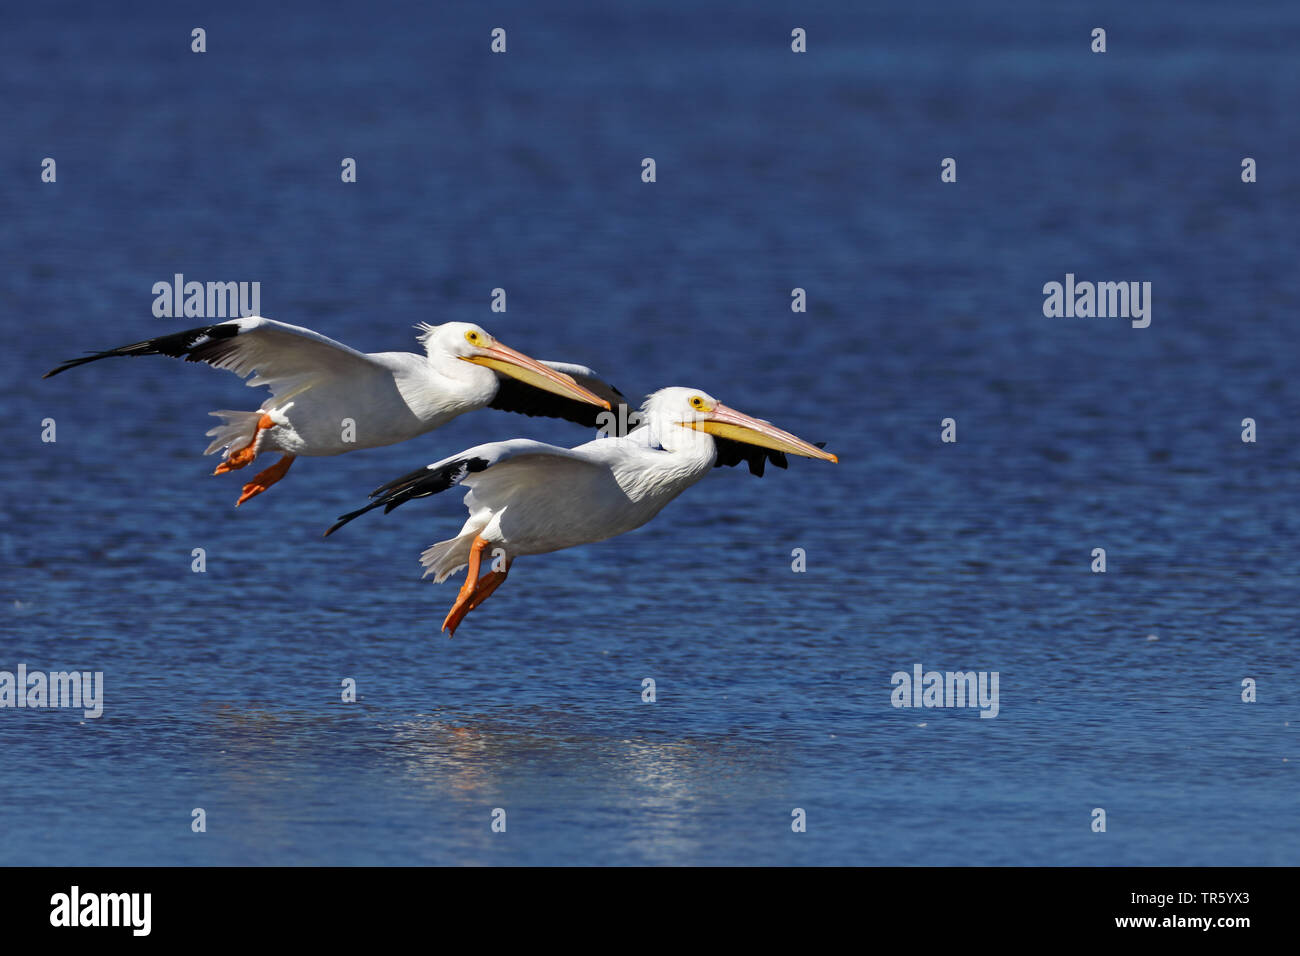 American White Pelican (Pelecanus erythrorhynchos), zwei pelikane Landung auf dem Wasser, USA, Florida, Sanibel Island Stockfoto